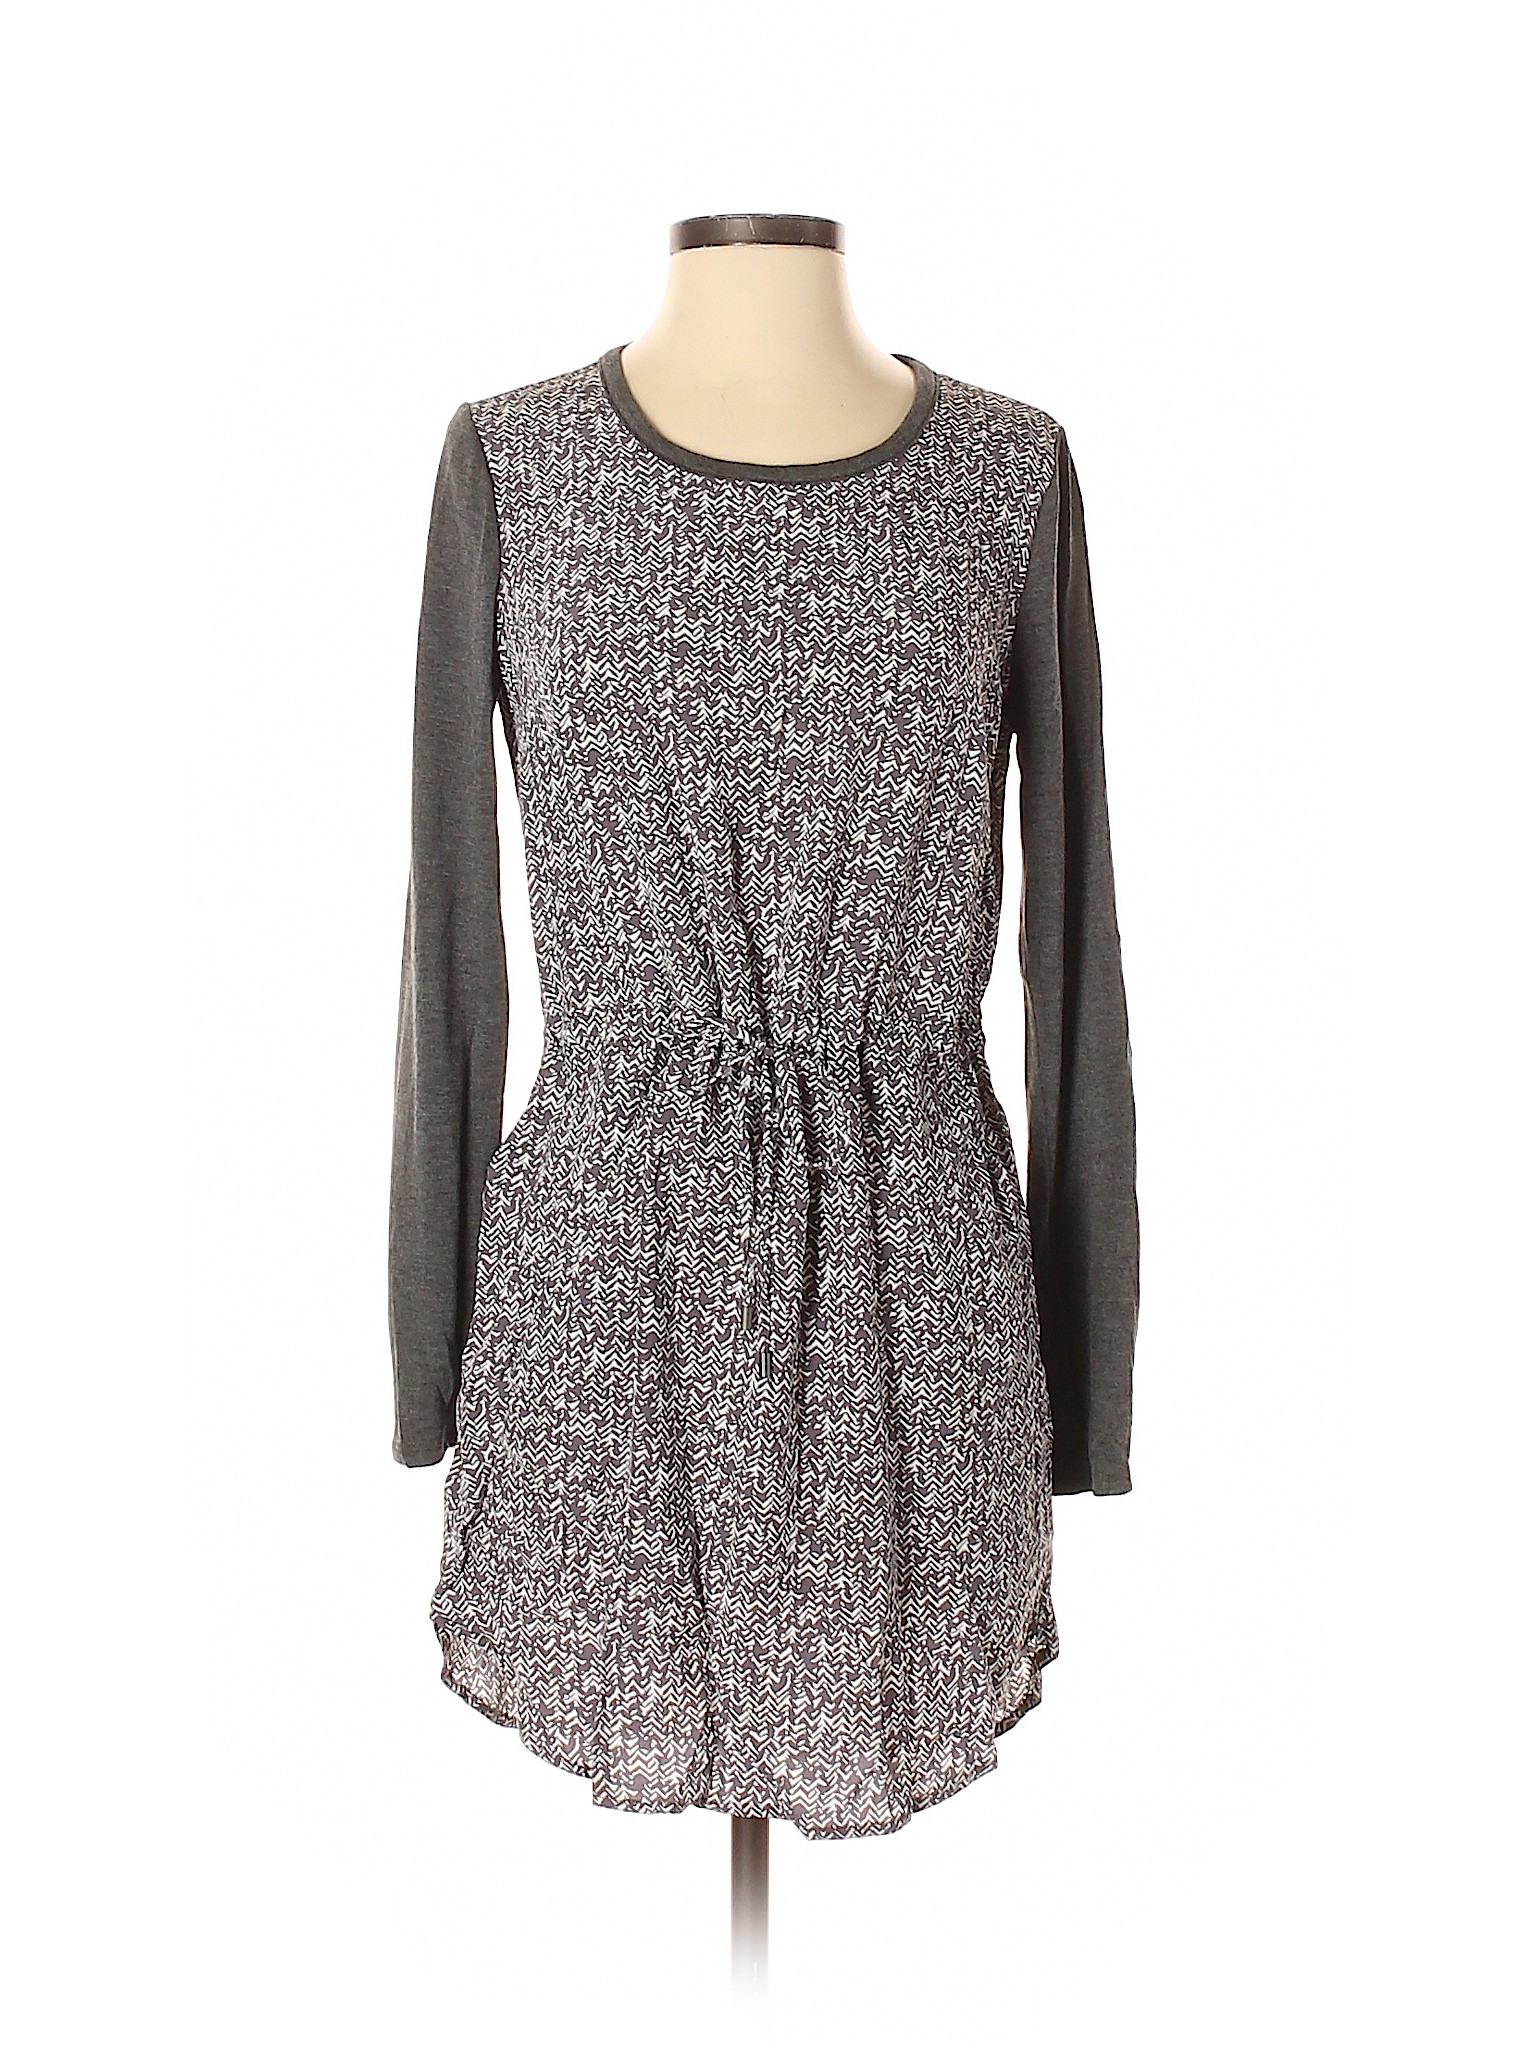 Lou & Grey Women Gray Casual Dress XS | eBay